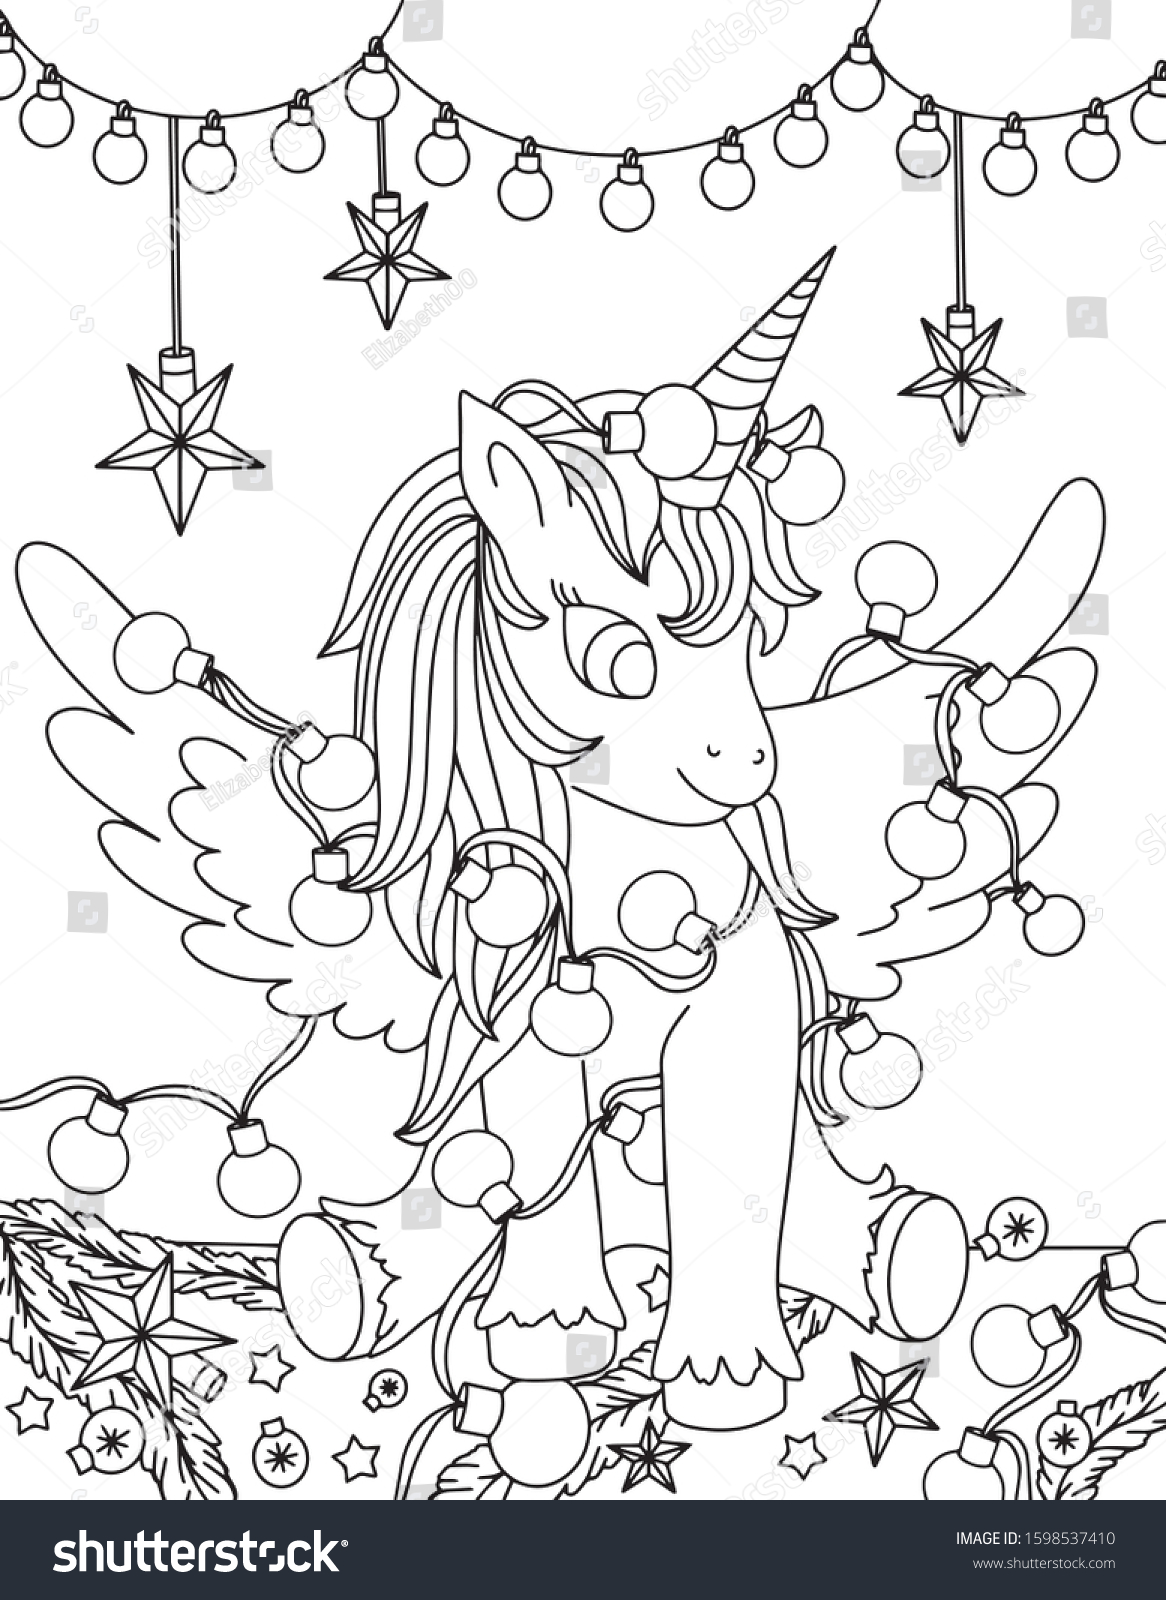 Merry Christmas Unicorn Coloring Hand Drawn Stock Vektorgrafik ...